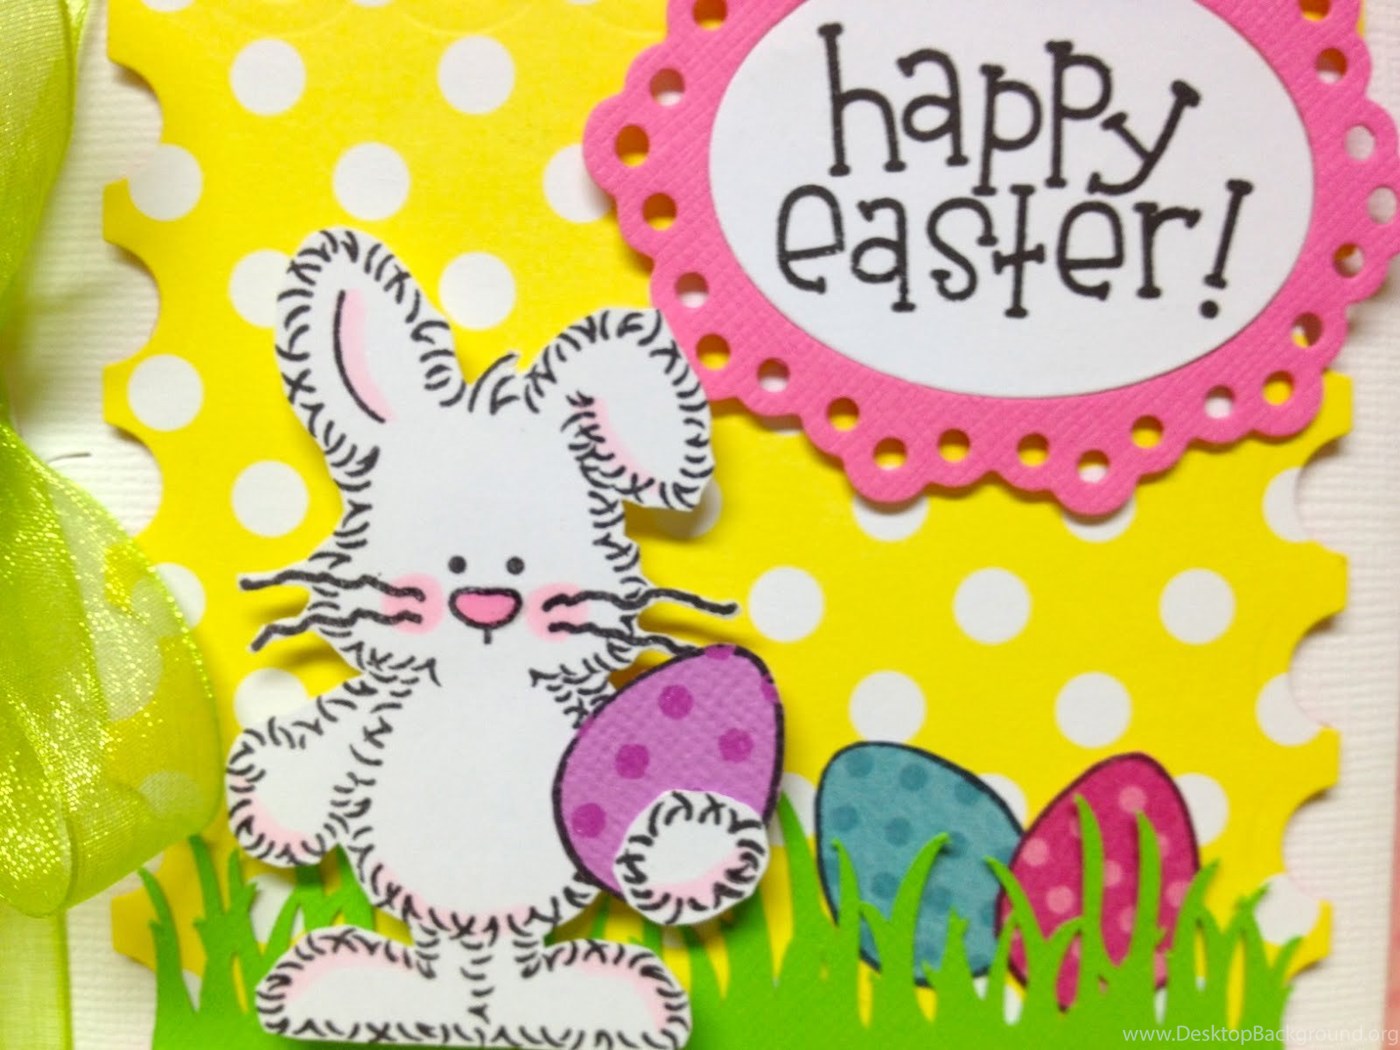 Easter перевод с английского на русский. Happy Easter!. Happy Easter Greeting Cards. Открытка на Пасху по английскому. Открытки с Пасхой на английском.